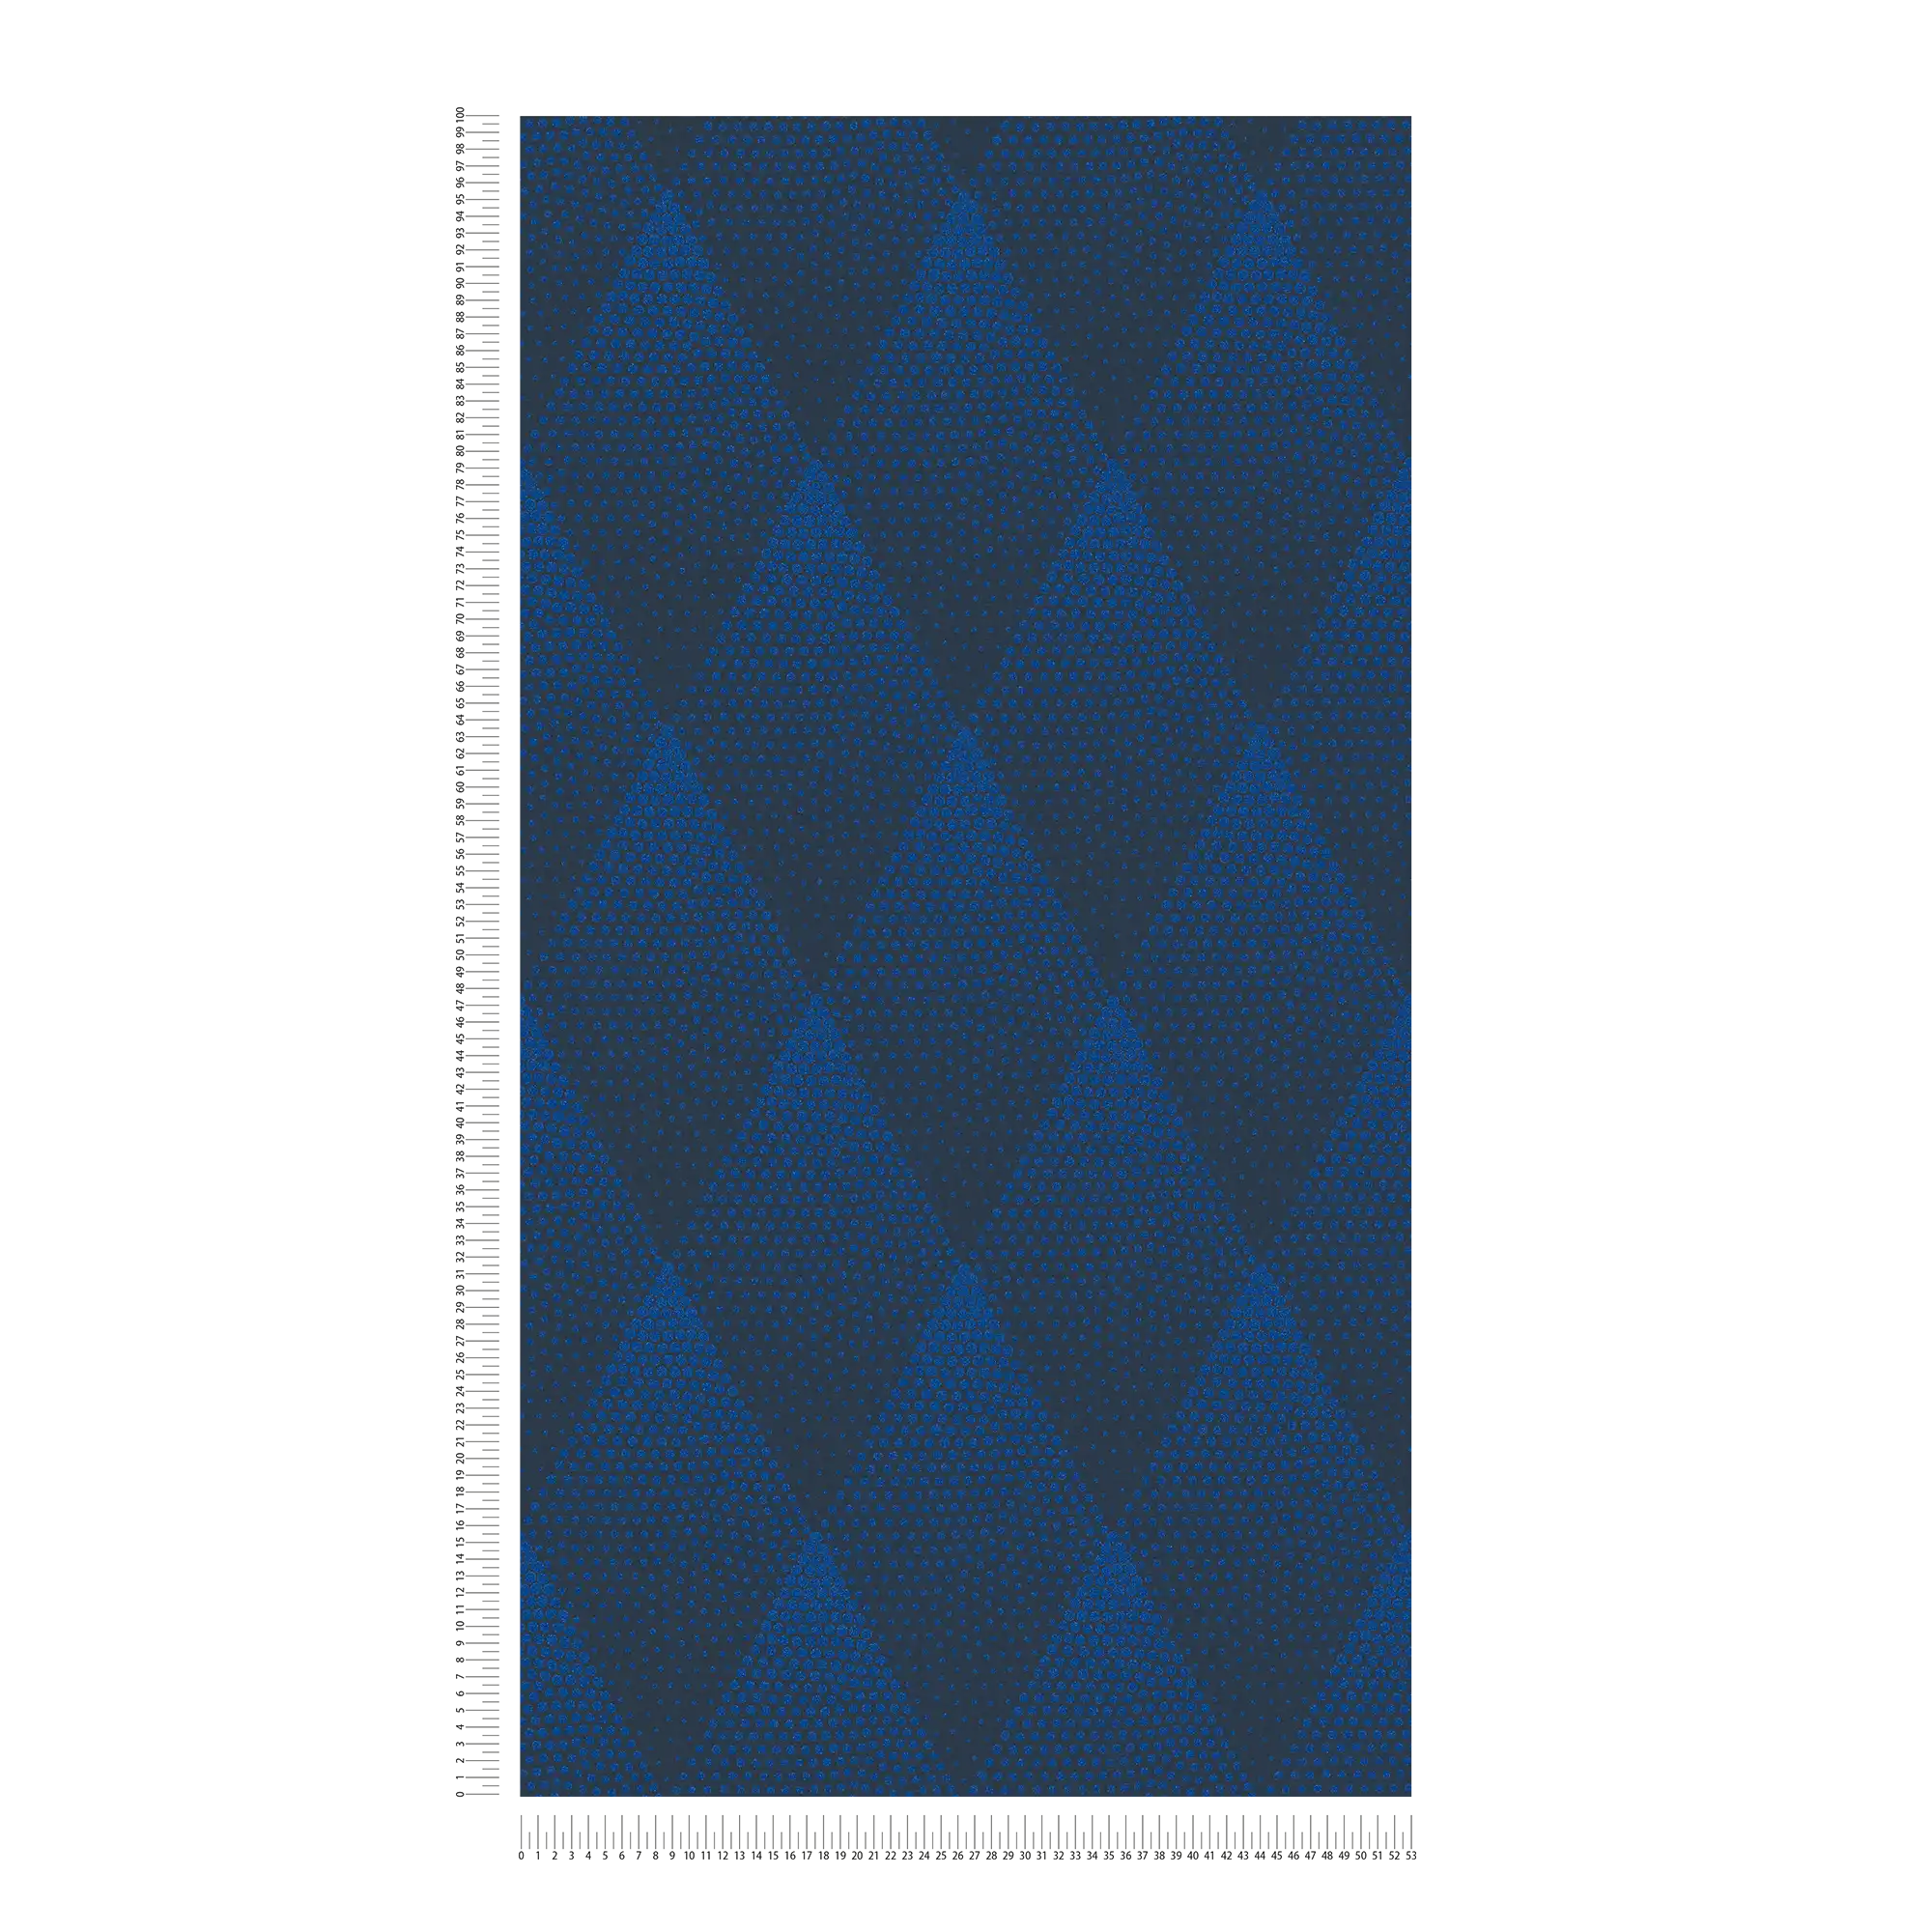             Stippen behang glitter effect in retro stijl - blauw, zwart
        